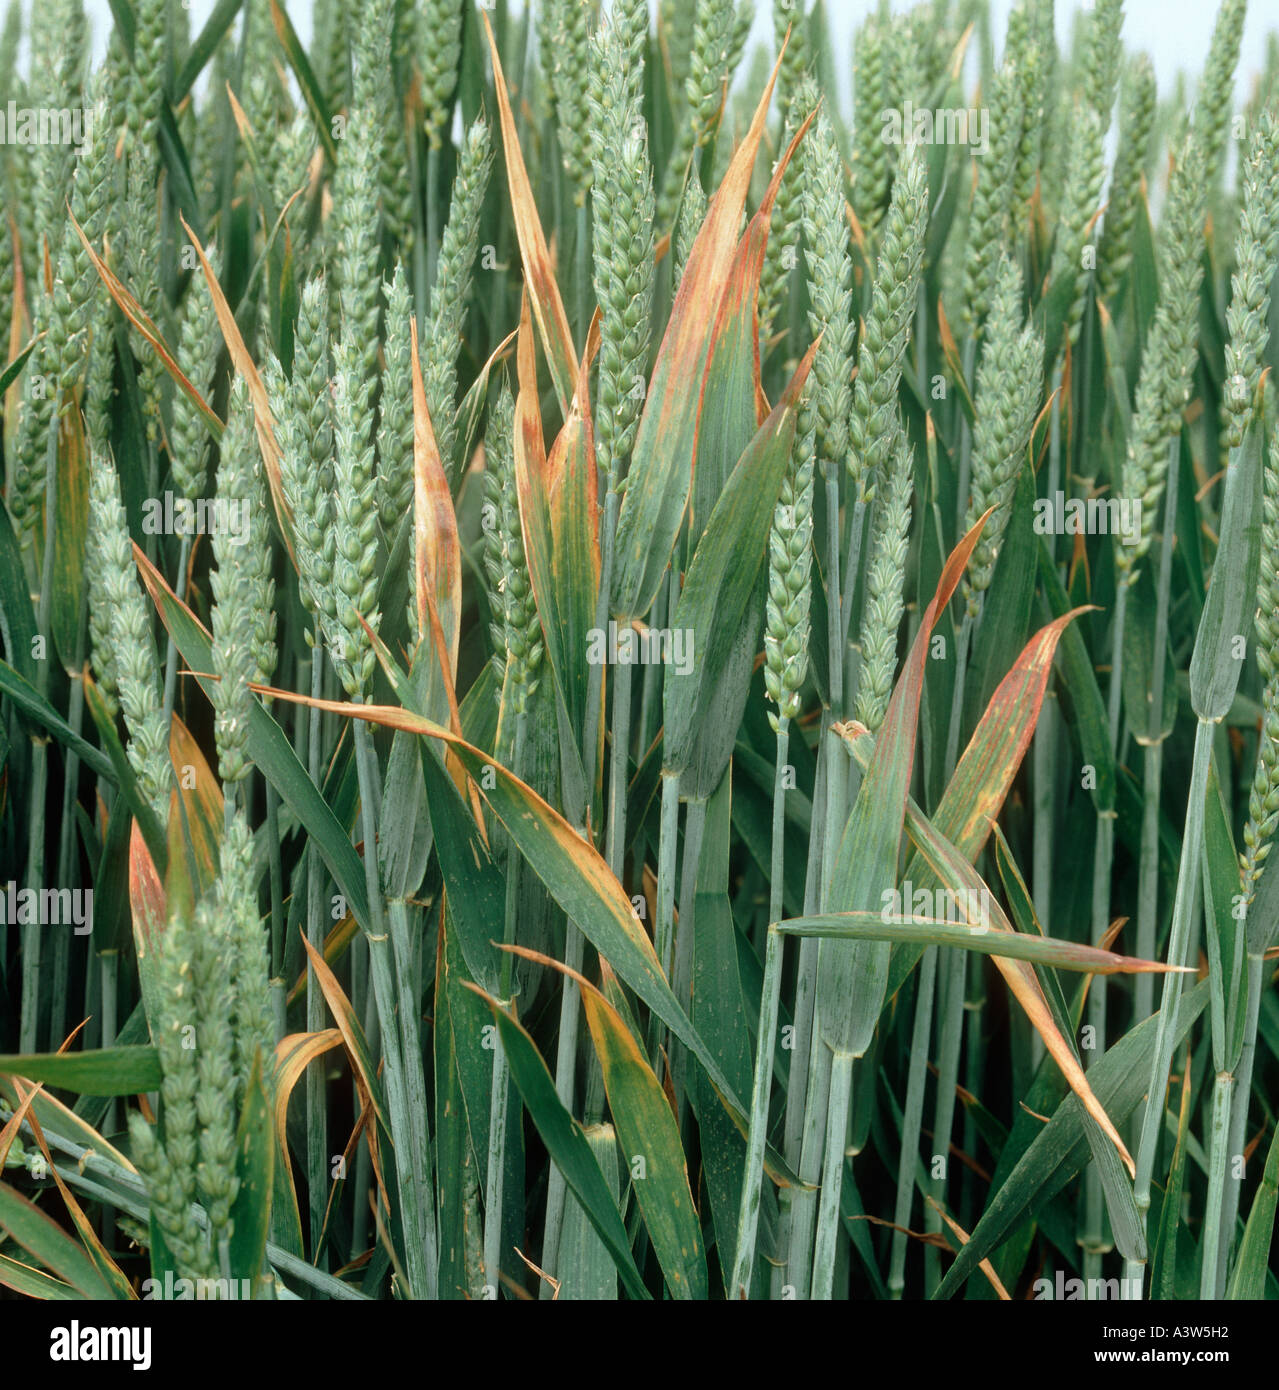 BYDV barley yellow dwarf virus symptoms in maturing wheat crop Stock Photo